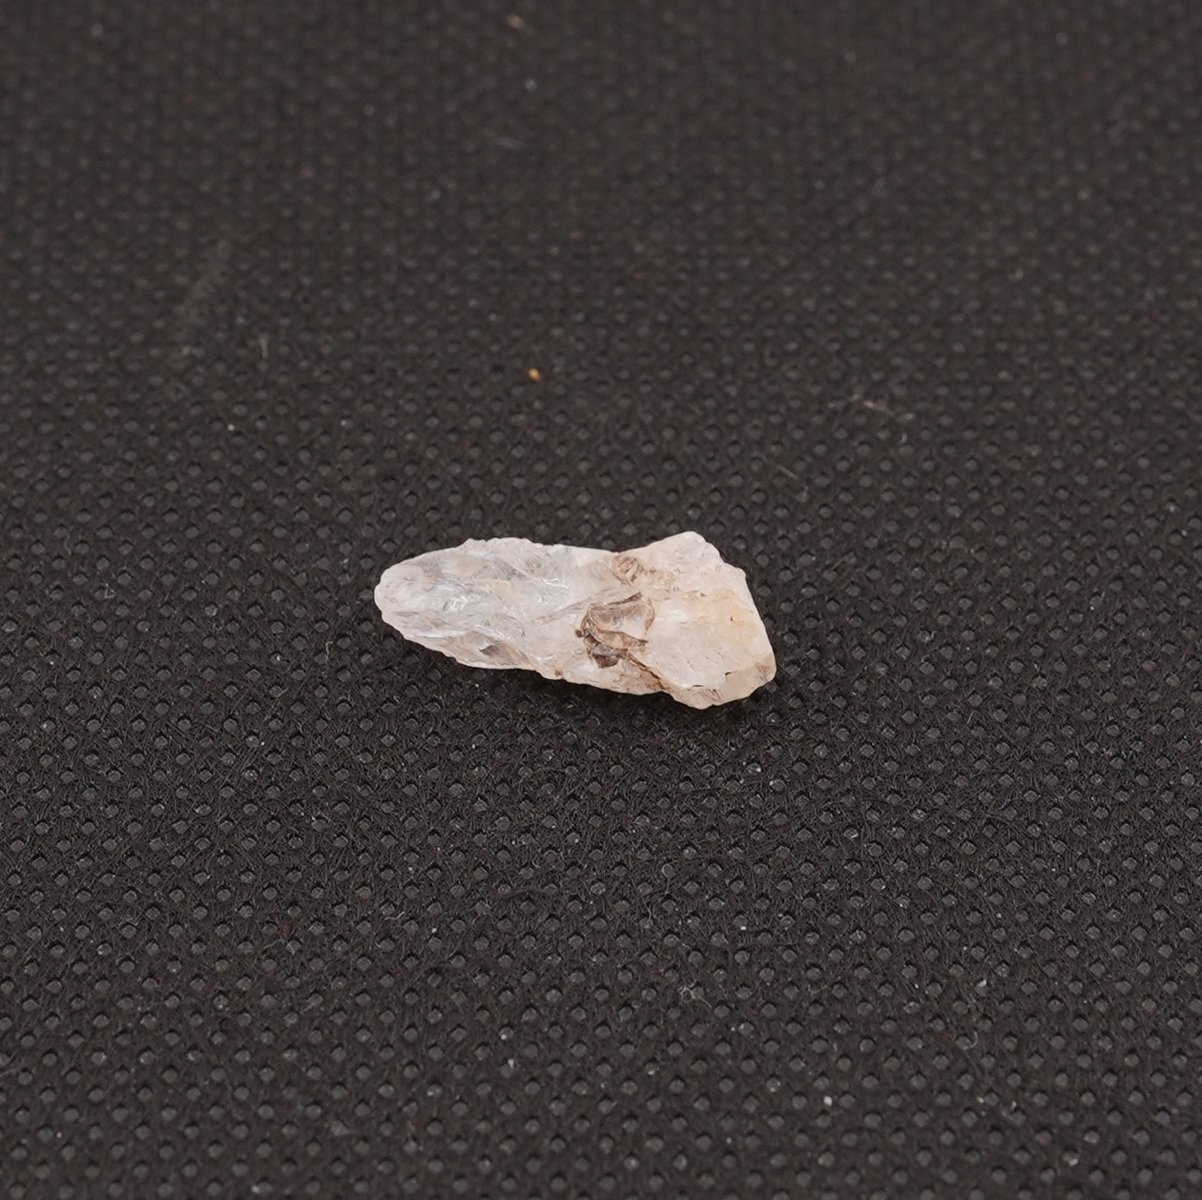 Fenacit nigerian cristal natural unicat f298